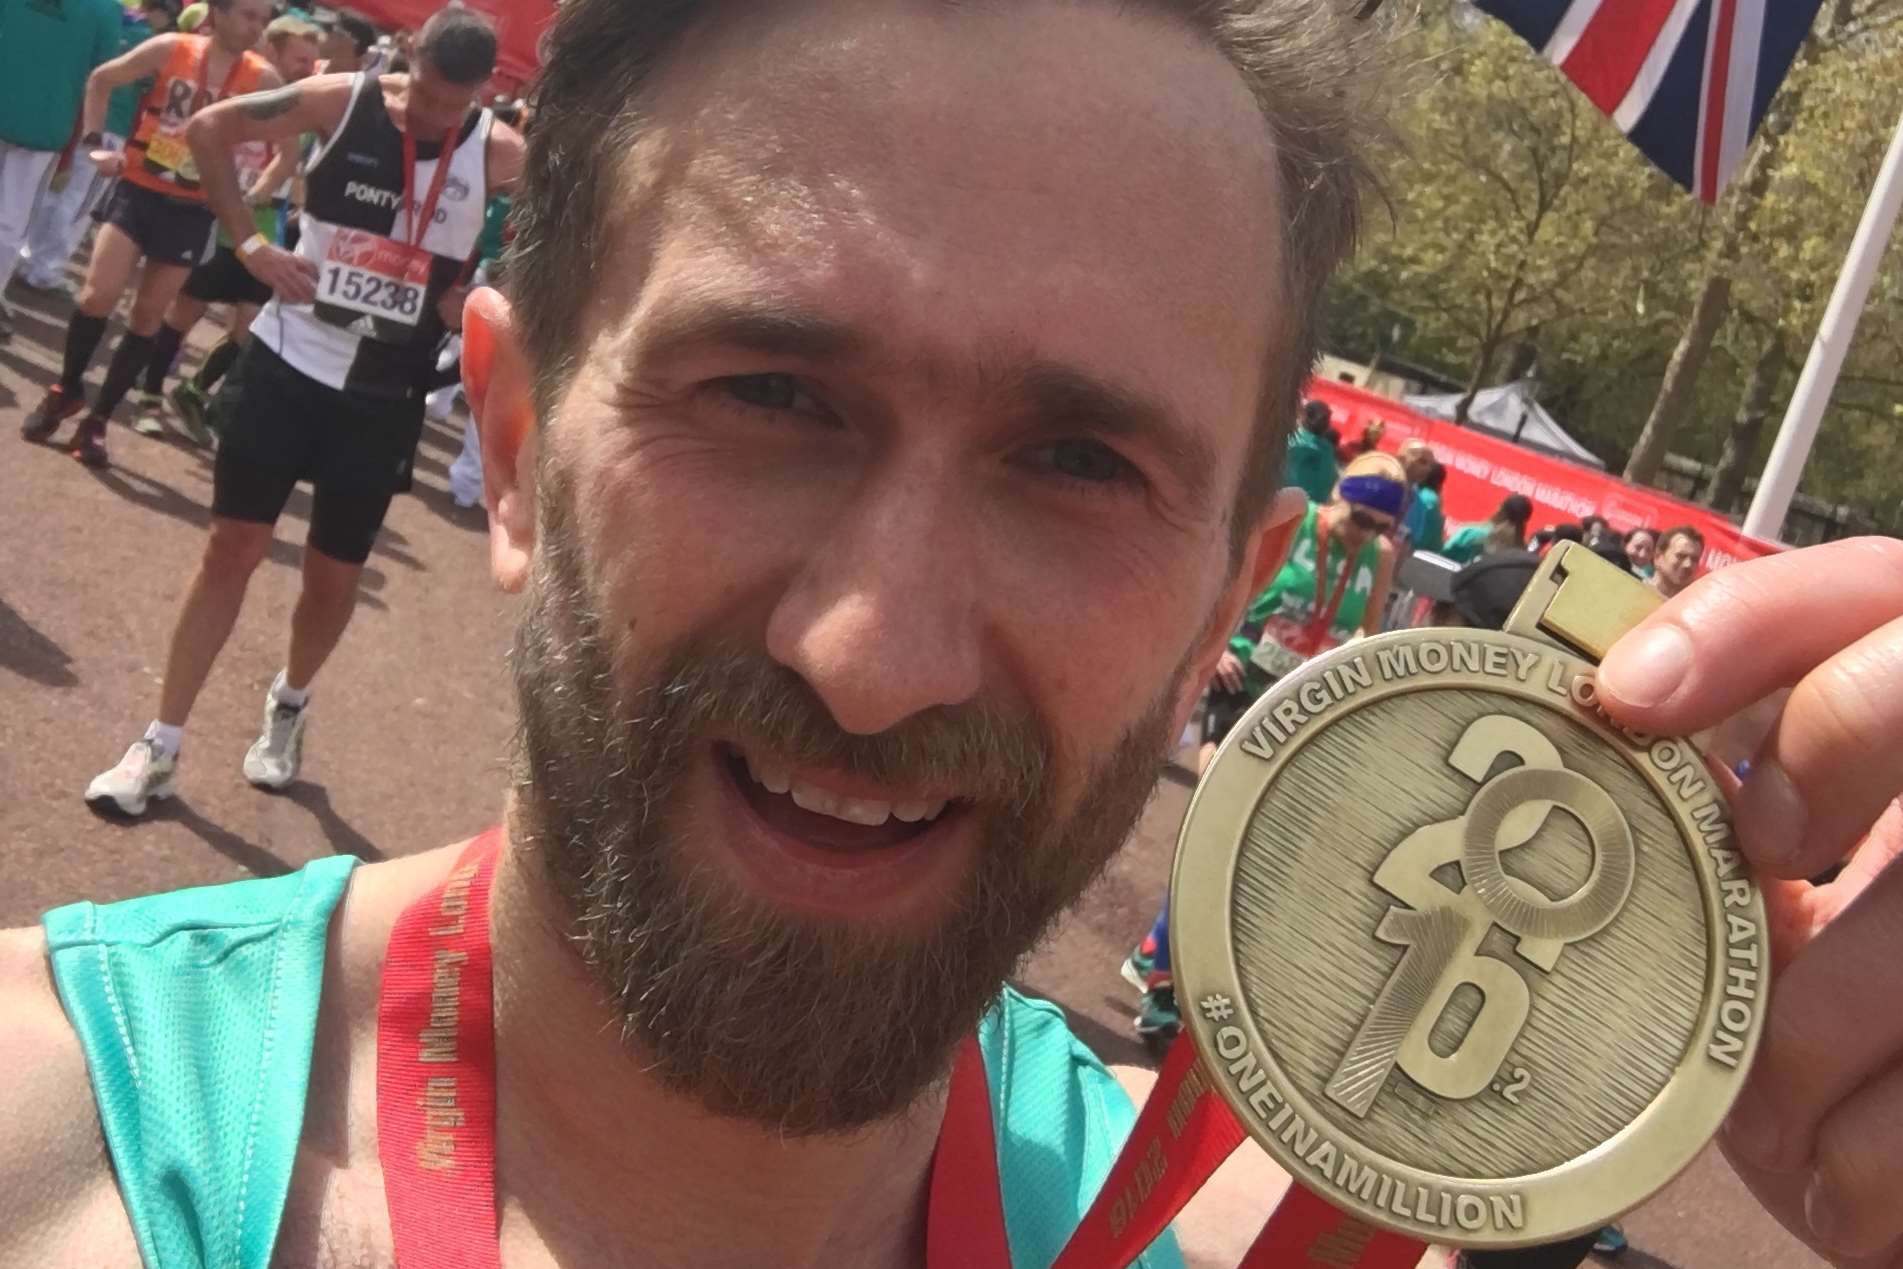 Mark Mooney ran the marathon in three hours 19 minutes.